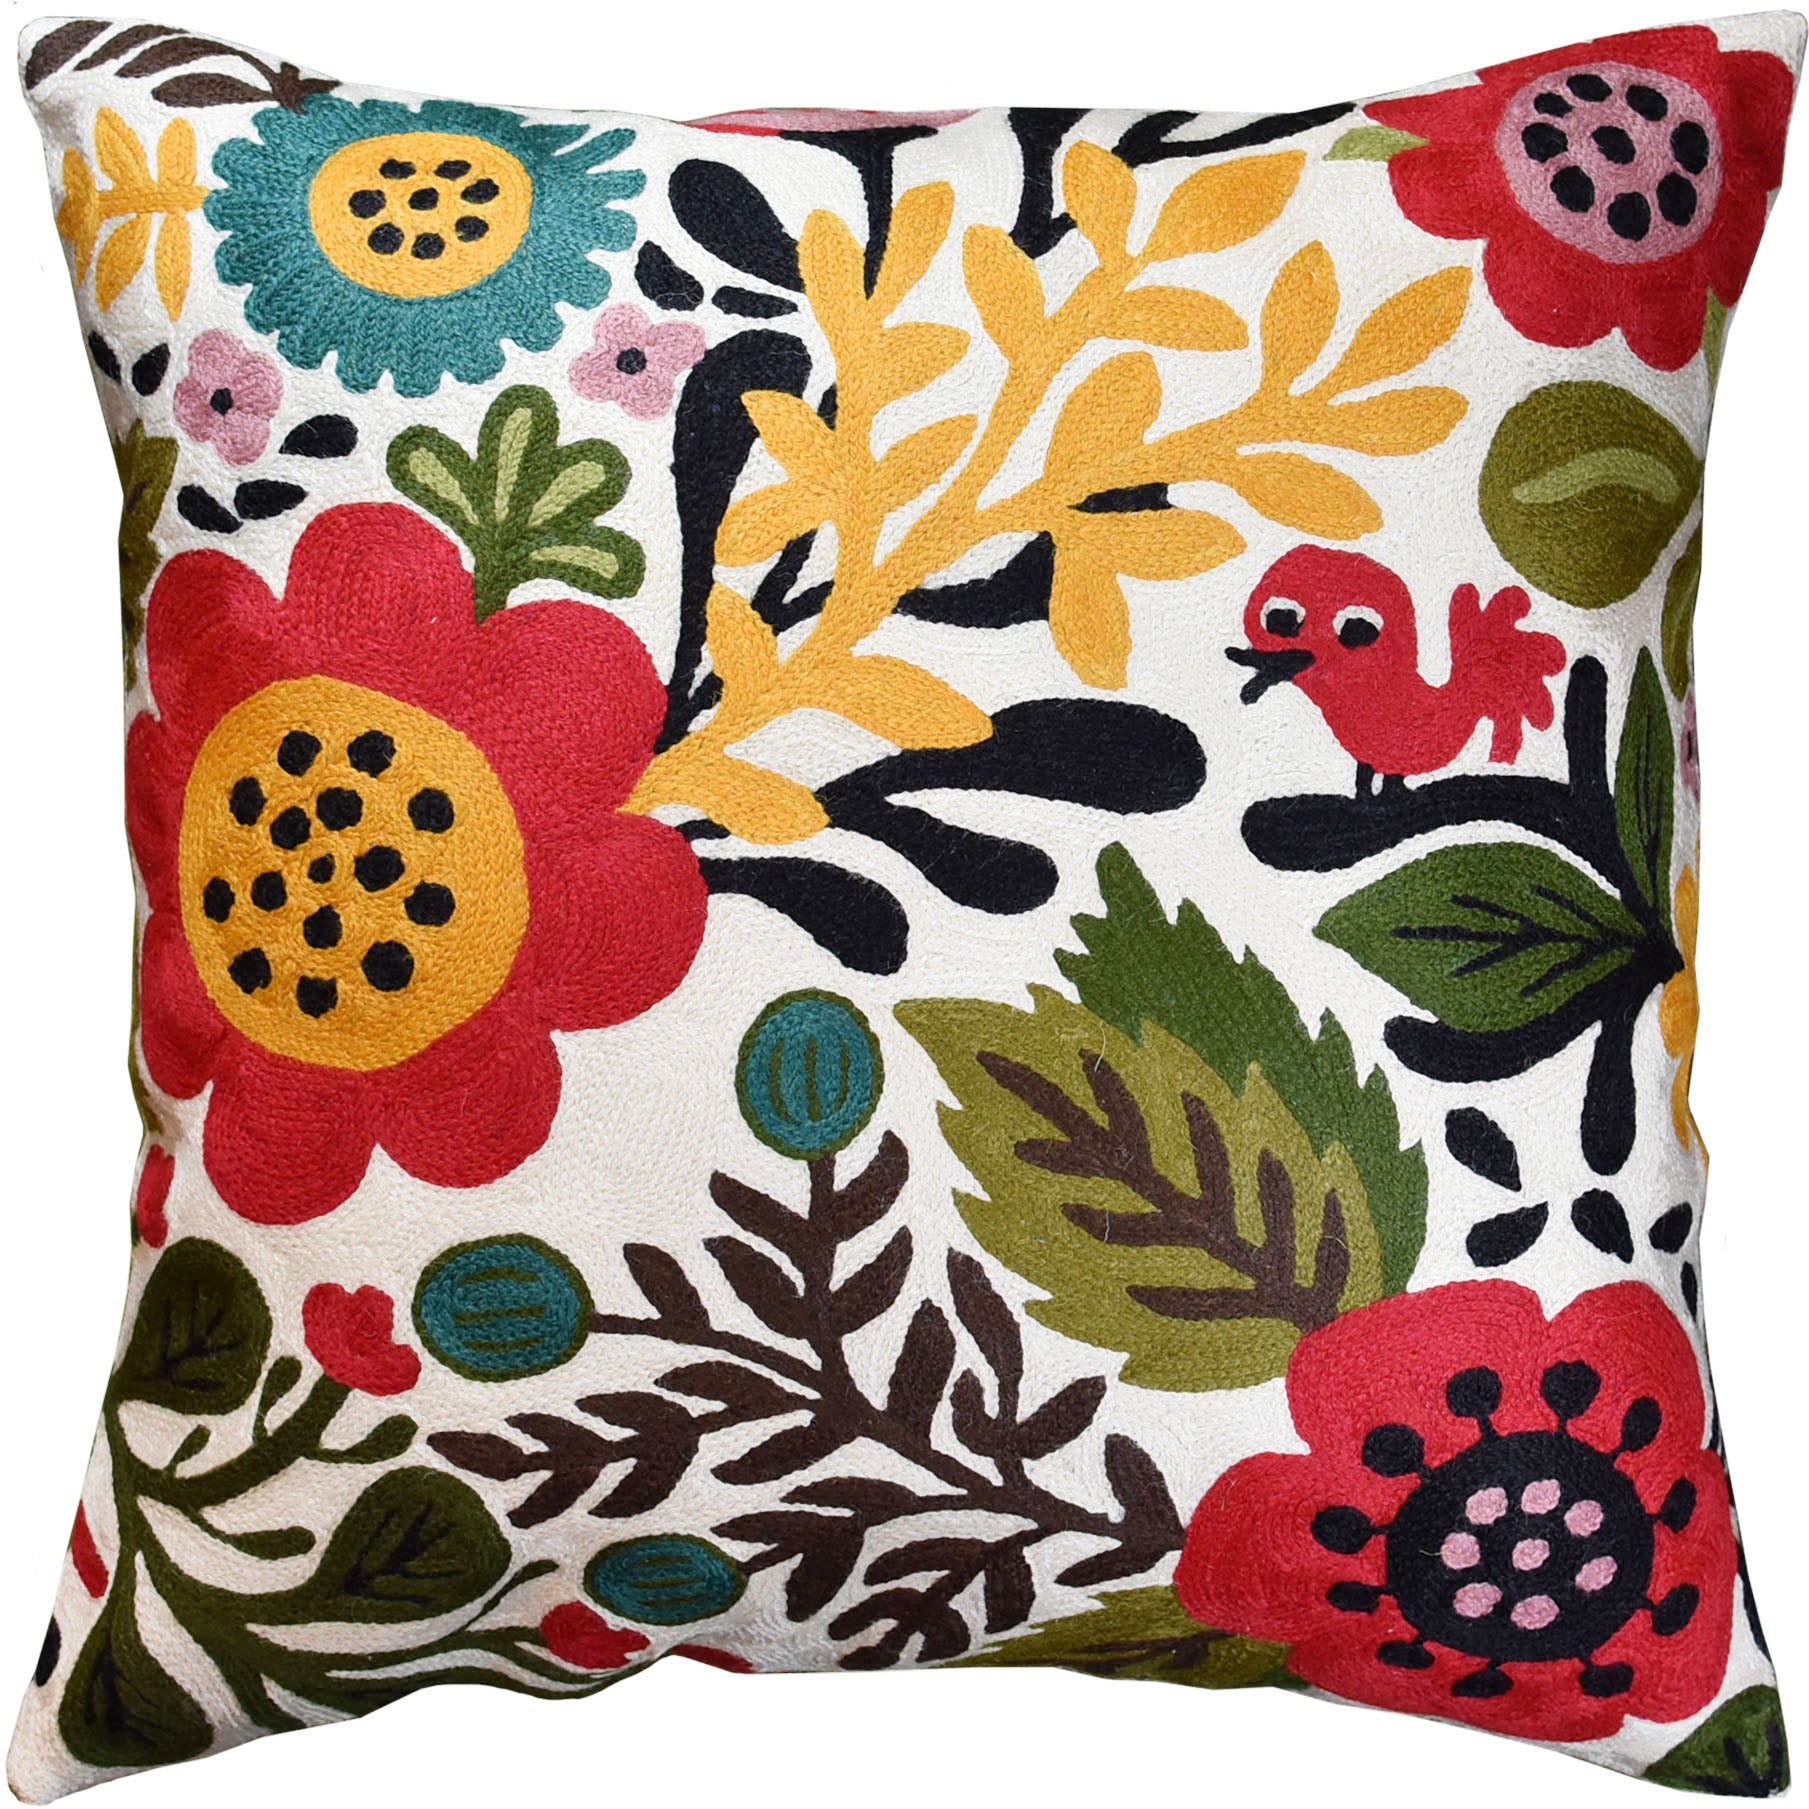 Flower Floral Birds Square Home Decor Throw Pillow Case Sofa Waist Cushion Cover 